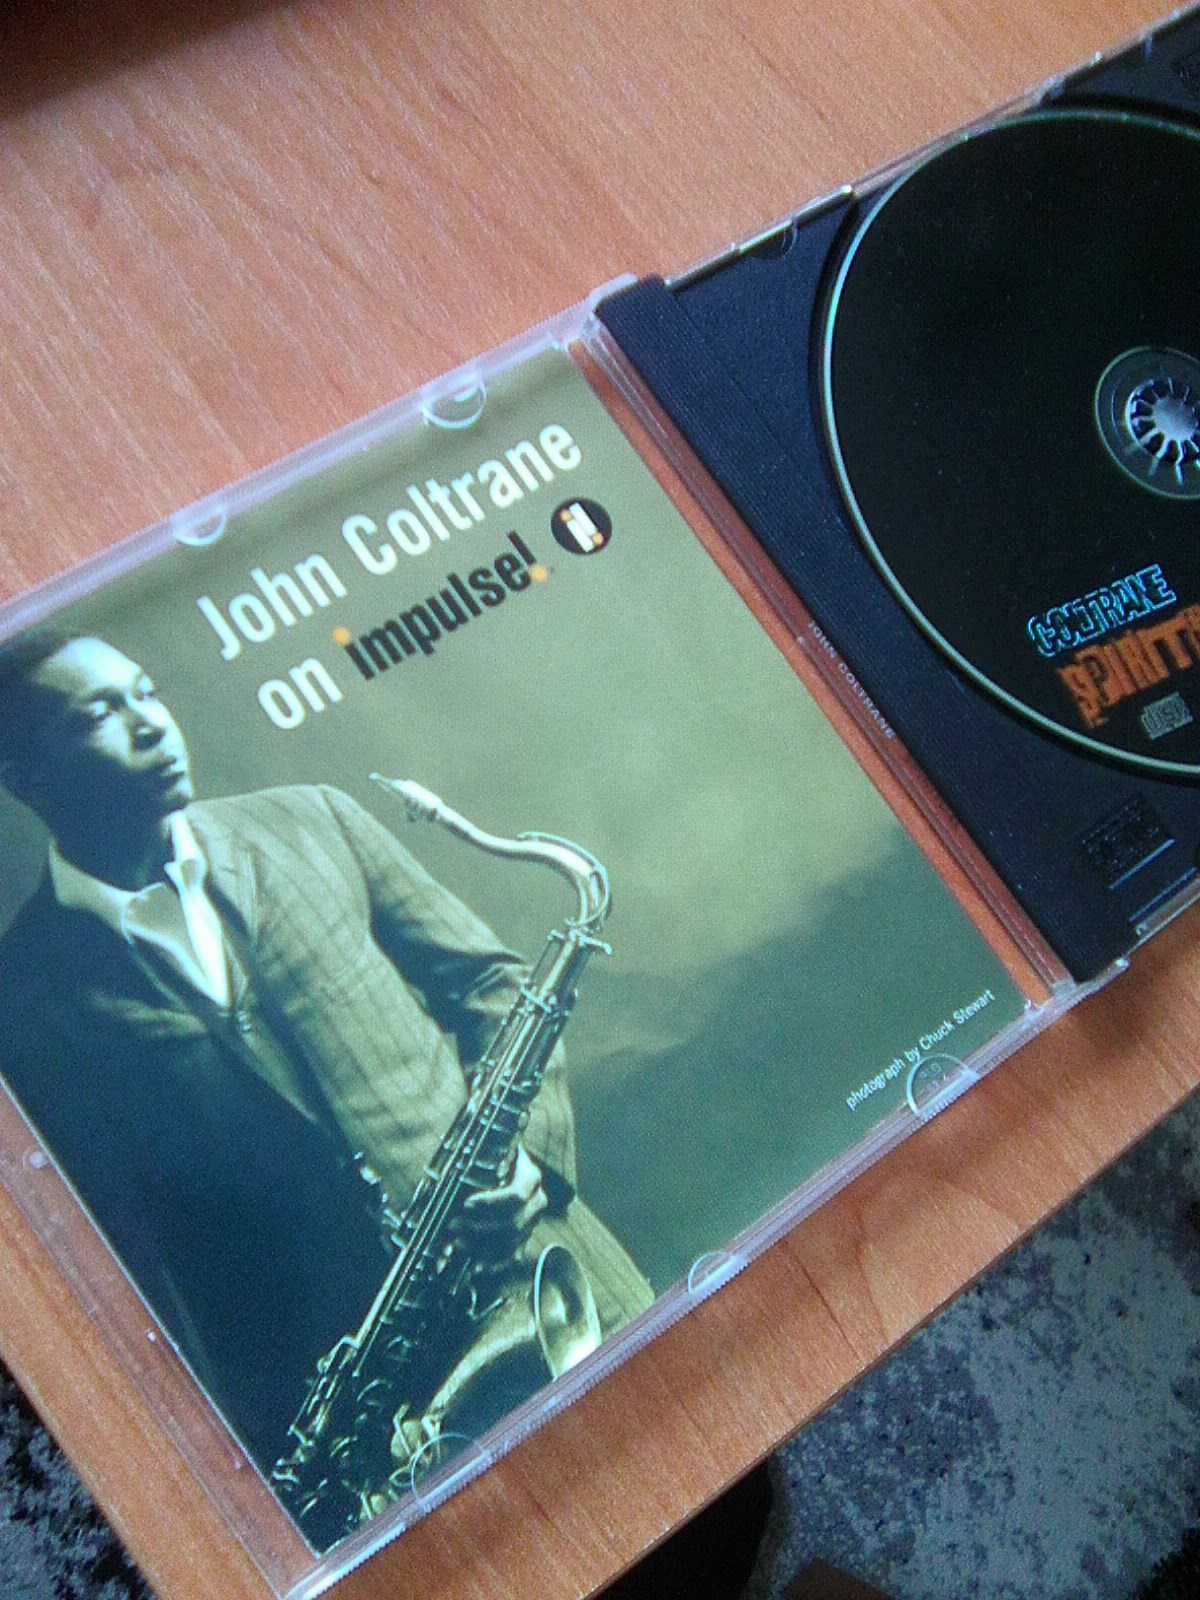 John Coltrane - Spiritual / wybrane utwory przez córkę Colrtana /